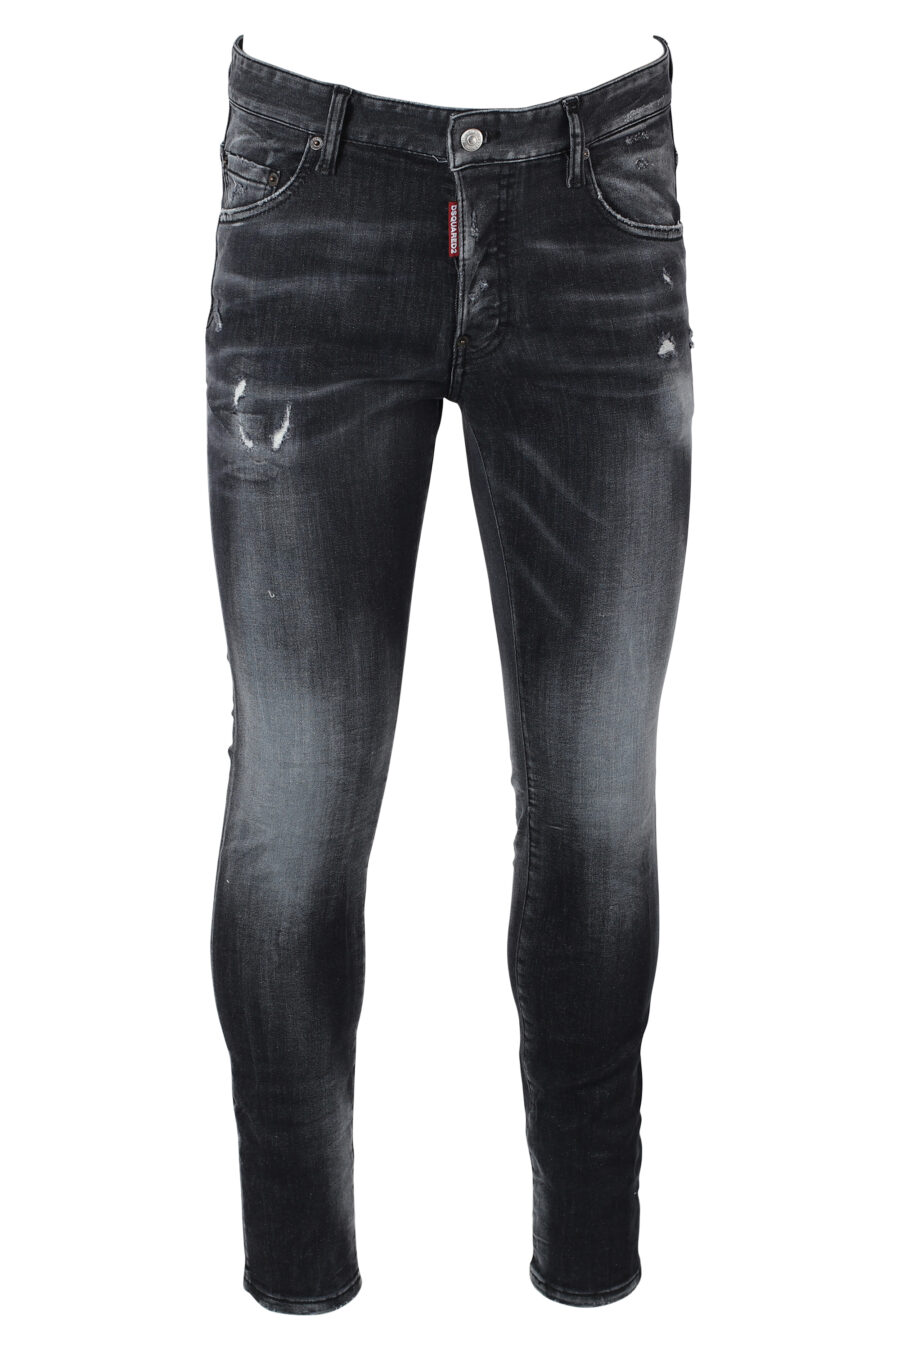 Semi-worn black jeans "super twinky jean" - IMG 9958